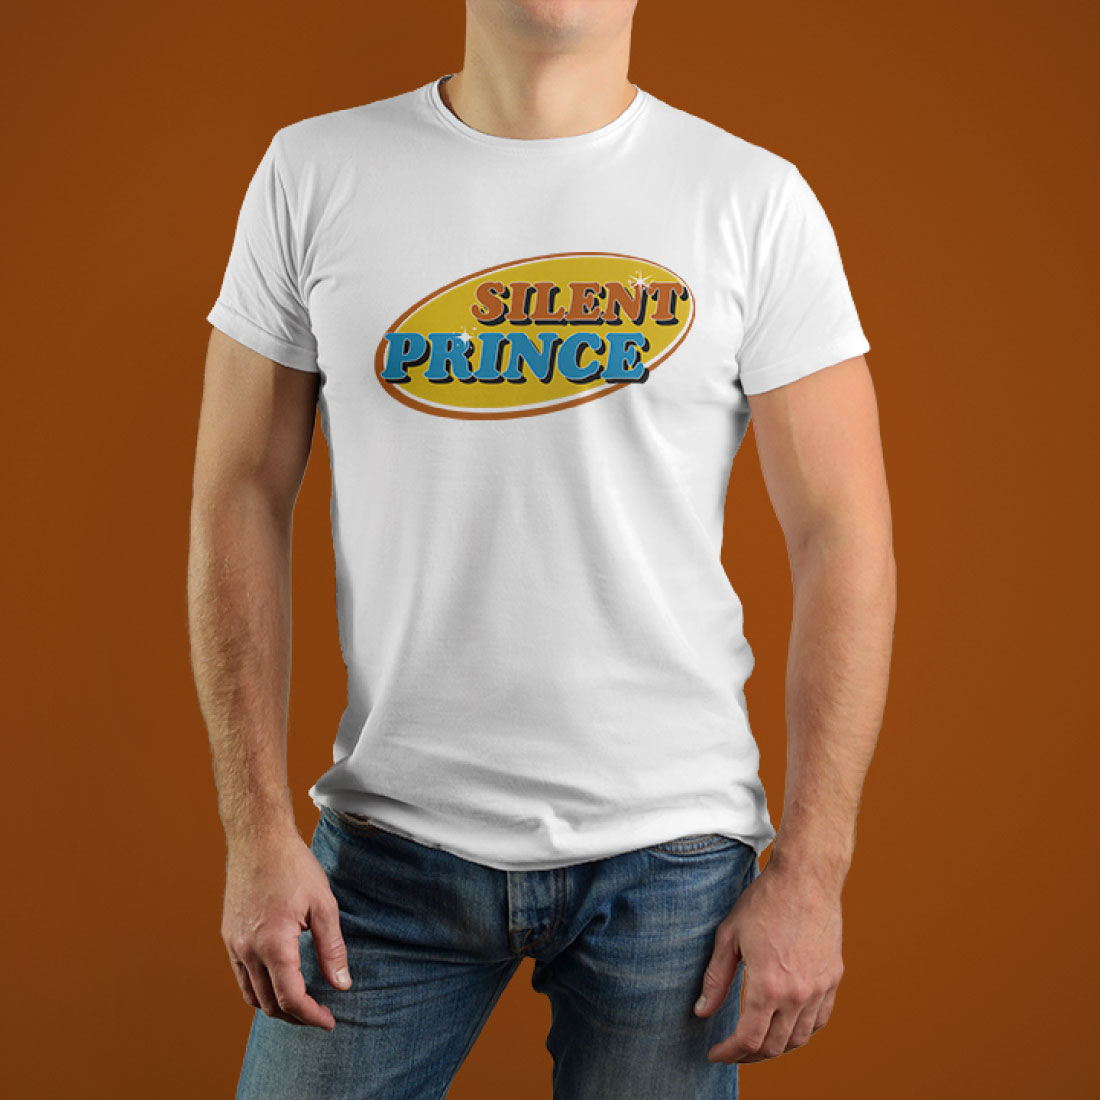 silent prince tshirt design 1100x1100 109